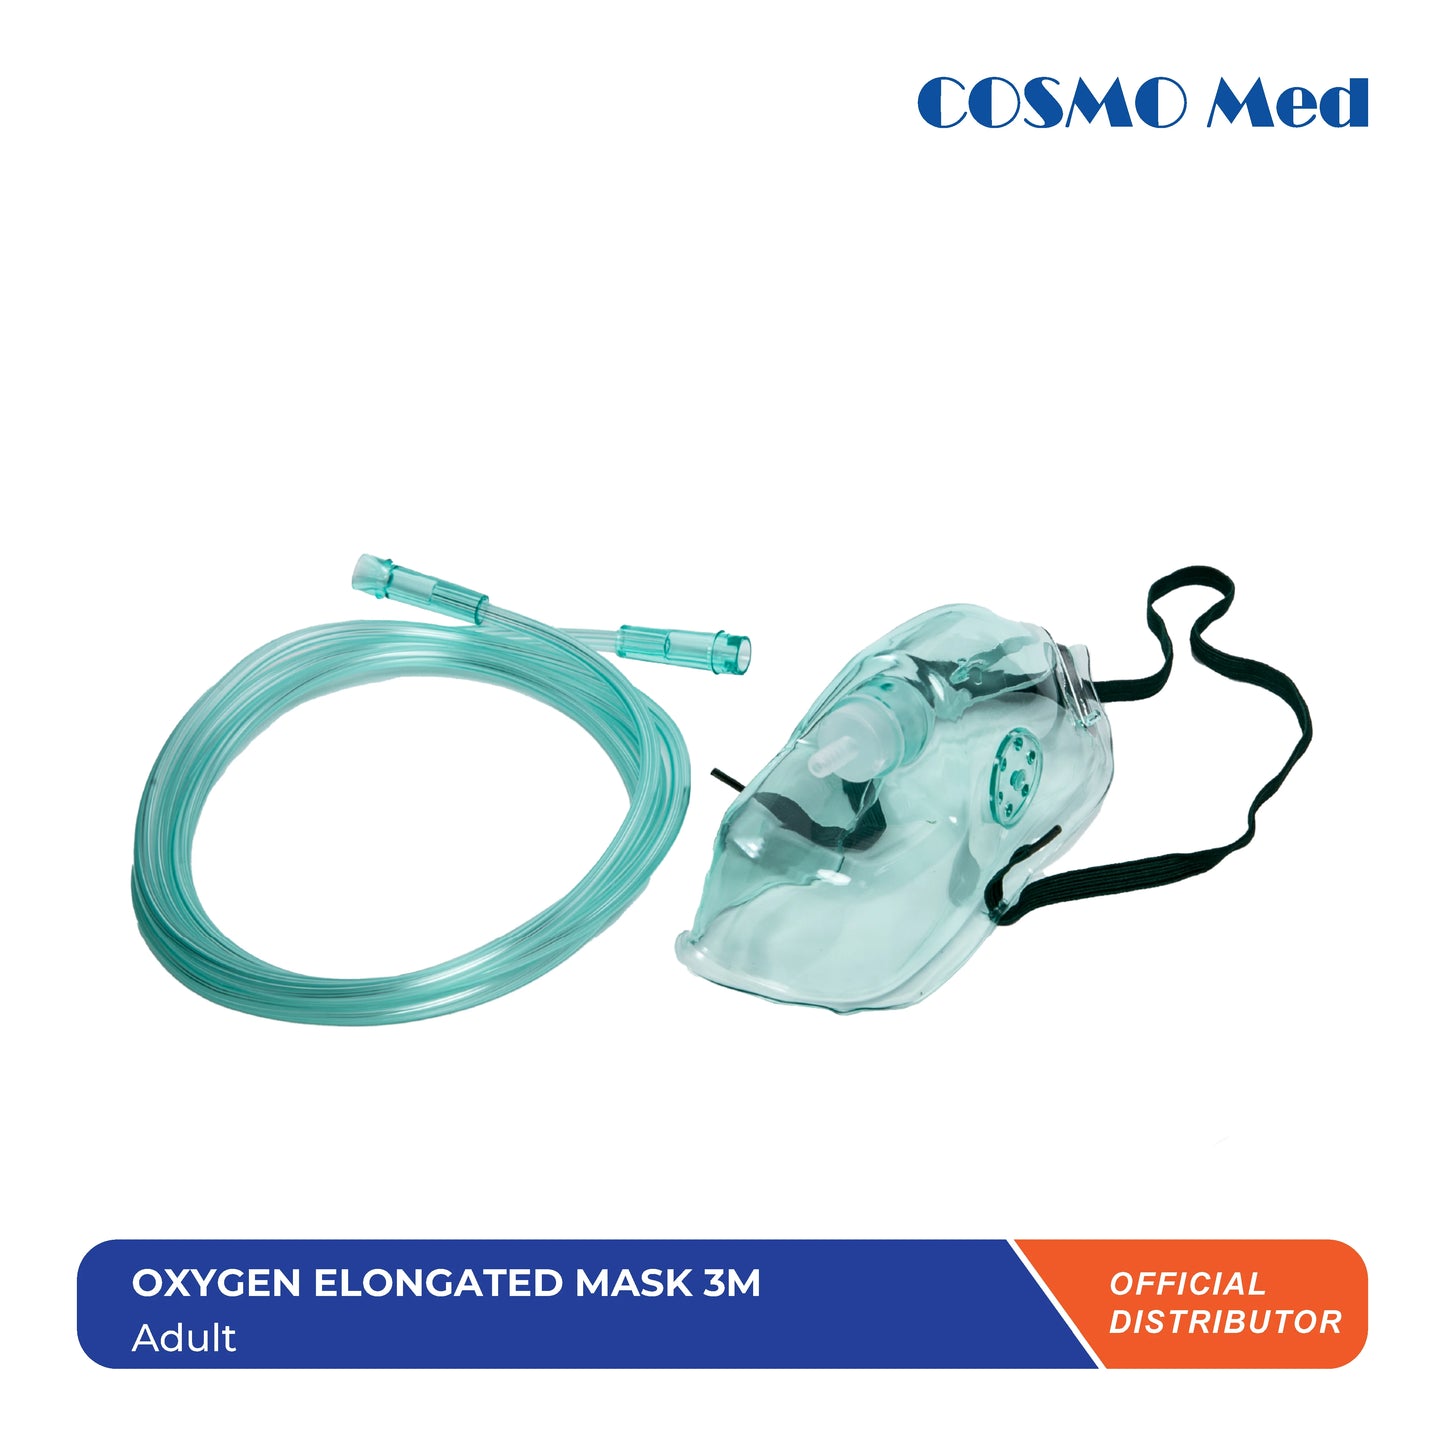 Oxygen Elongated Mask 3M Adult